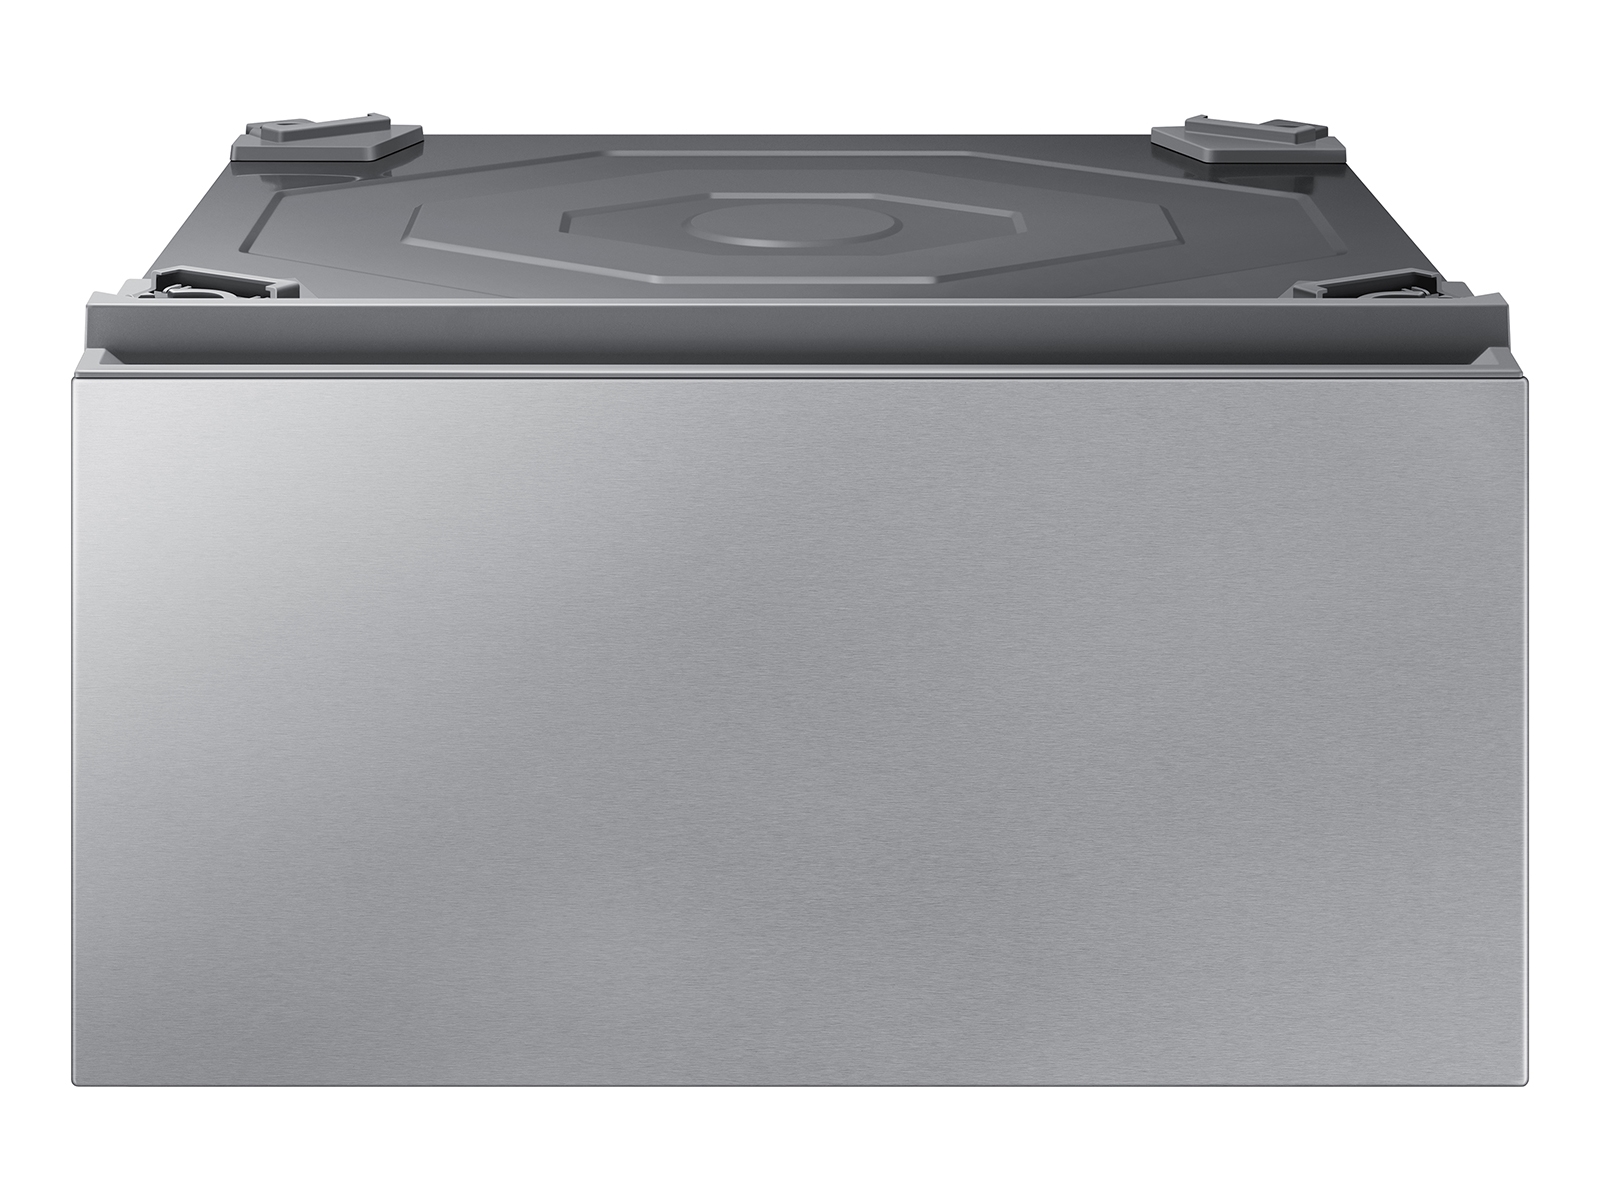 Samsung BESPOKE 27 Silver Steel Laundry Pedestal with Storage Drawer